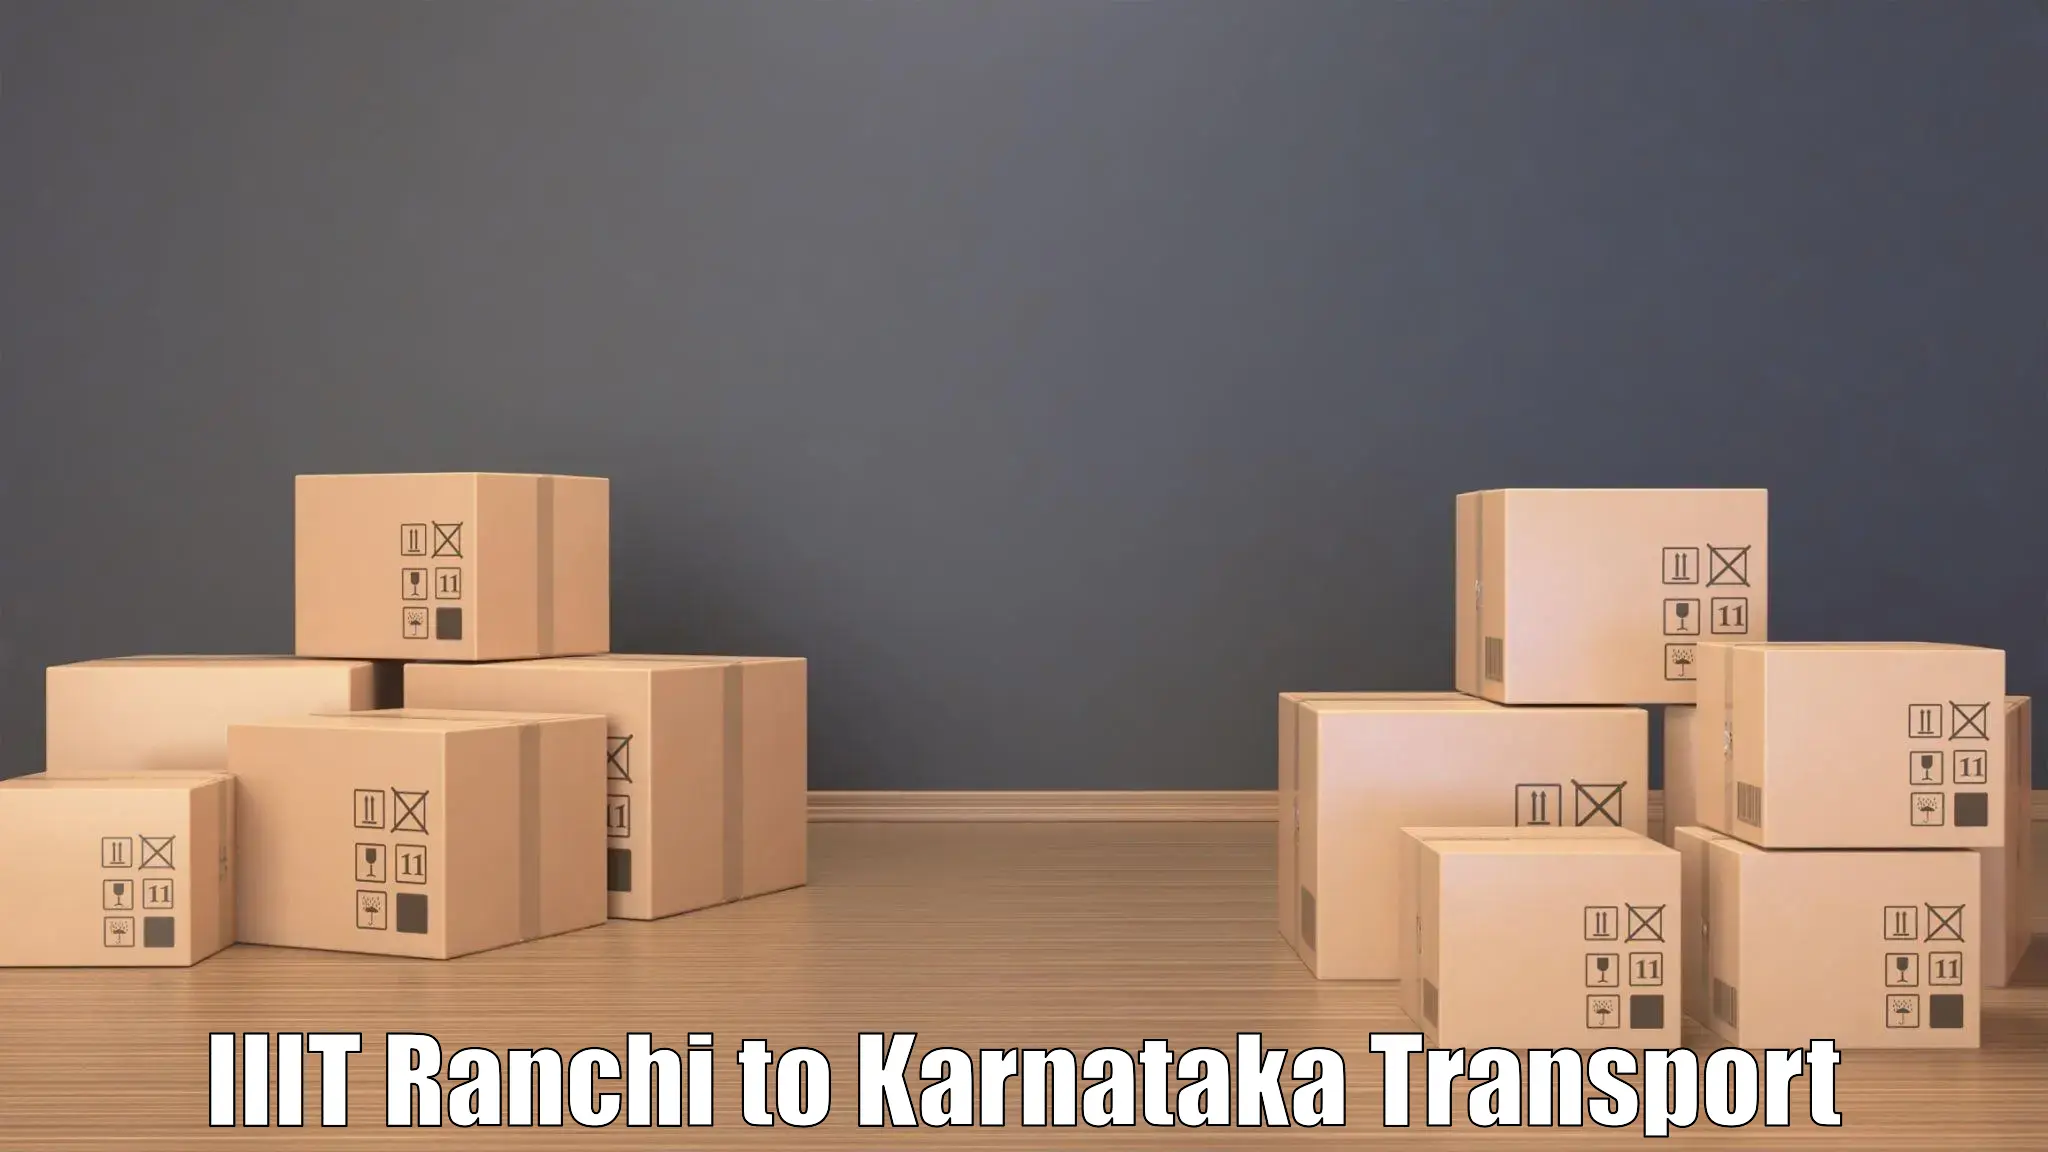 Interstate goods transport IIIT Ranchi to Kollegal